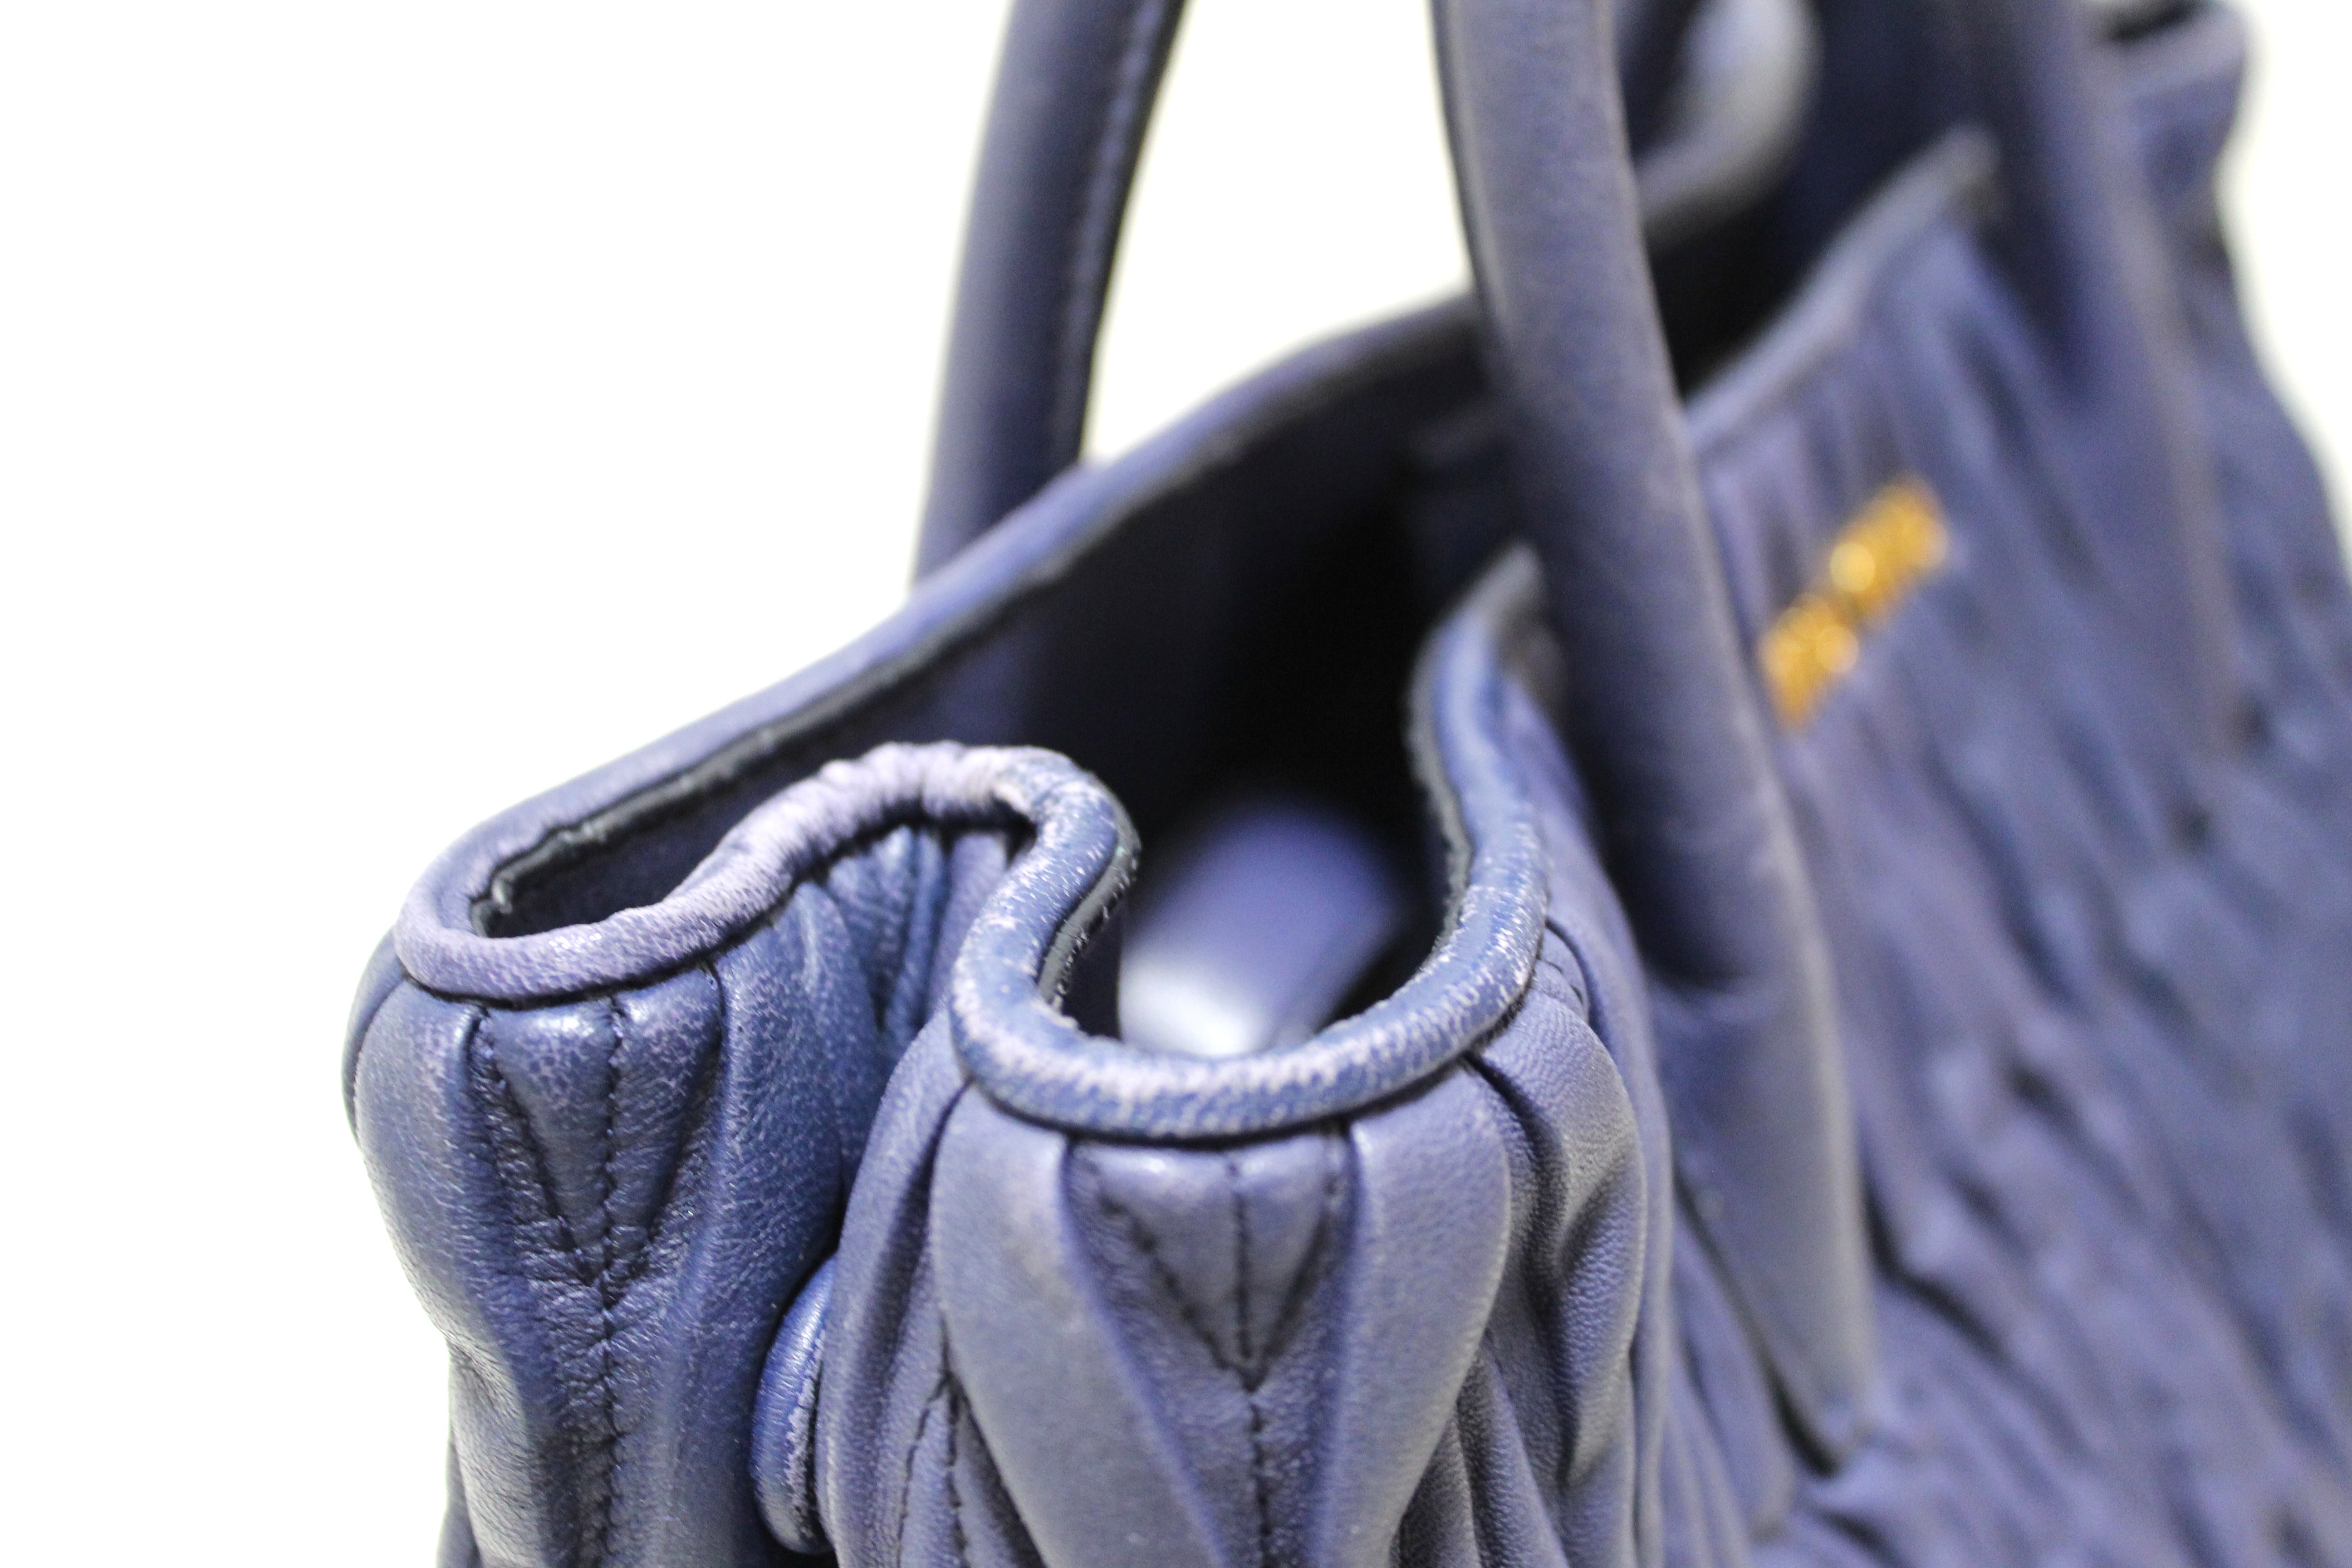 Authentic Miu Miu Blue Nappa Leather Maletasse Tote Bag With Long Strap